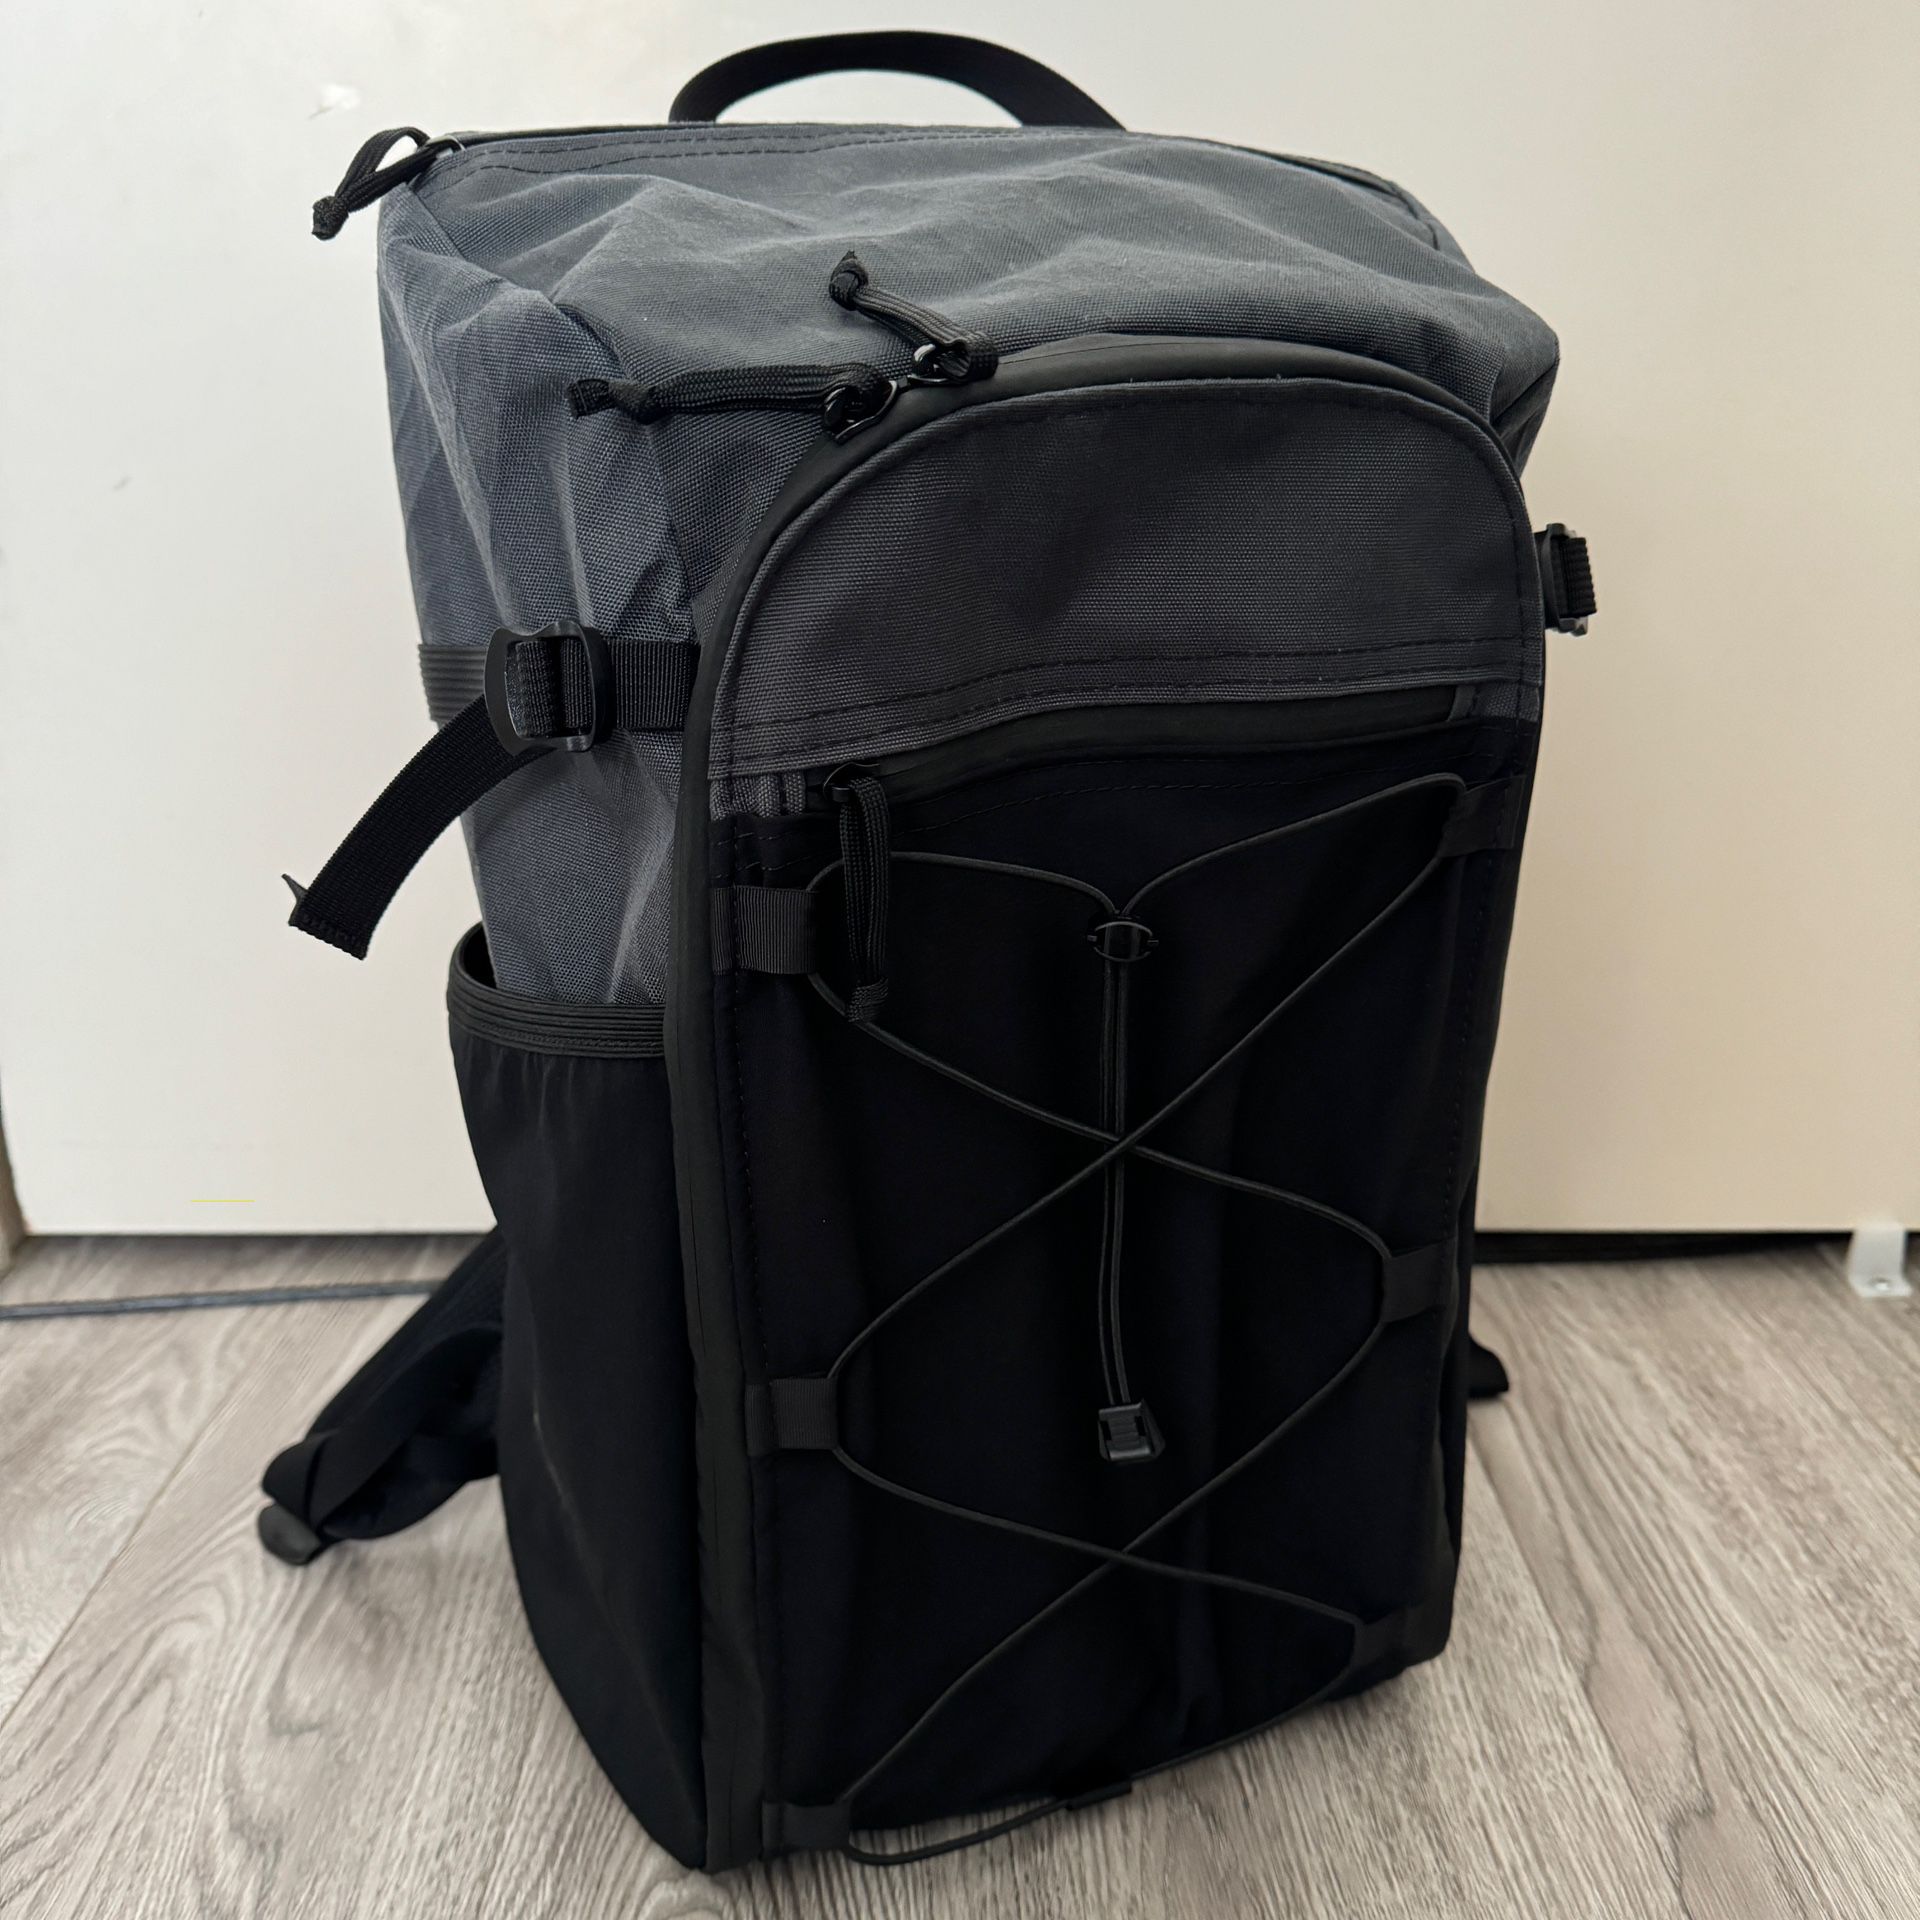 ULA Dragonfly 30L Travel Backpack - X50 Charcoal/Black Mesh